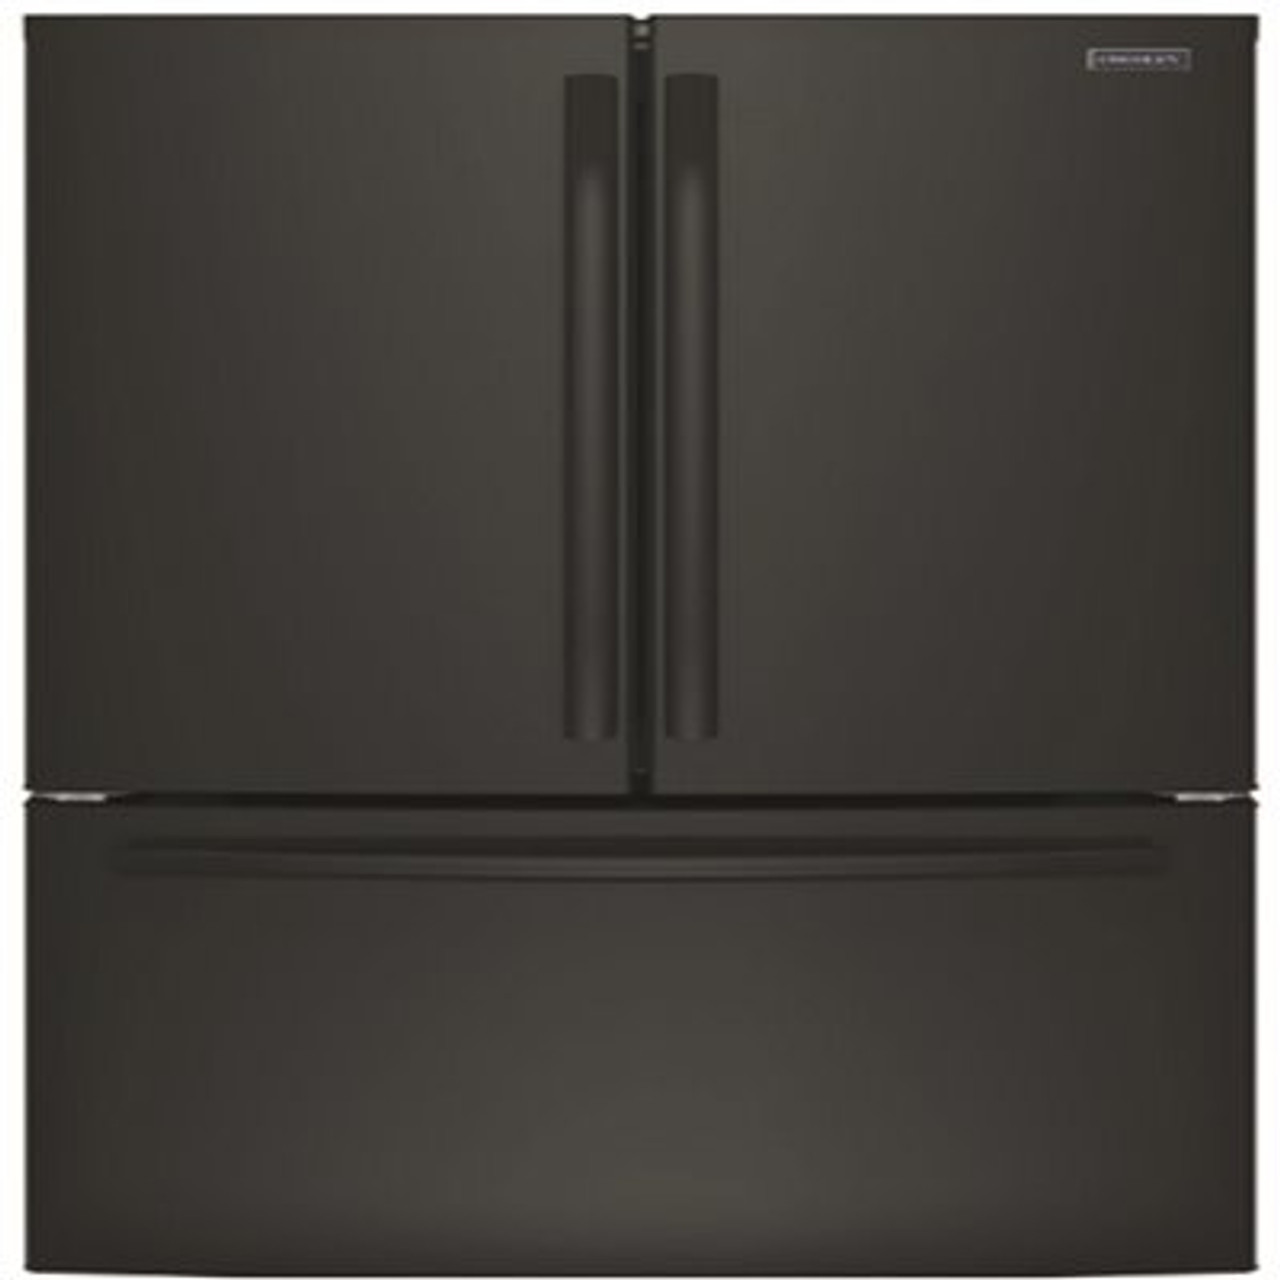 Crosley 24.8 cu. ft. French Door Refrigerator in Black